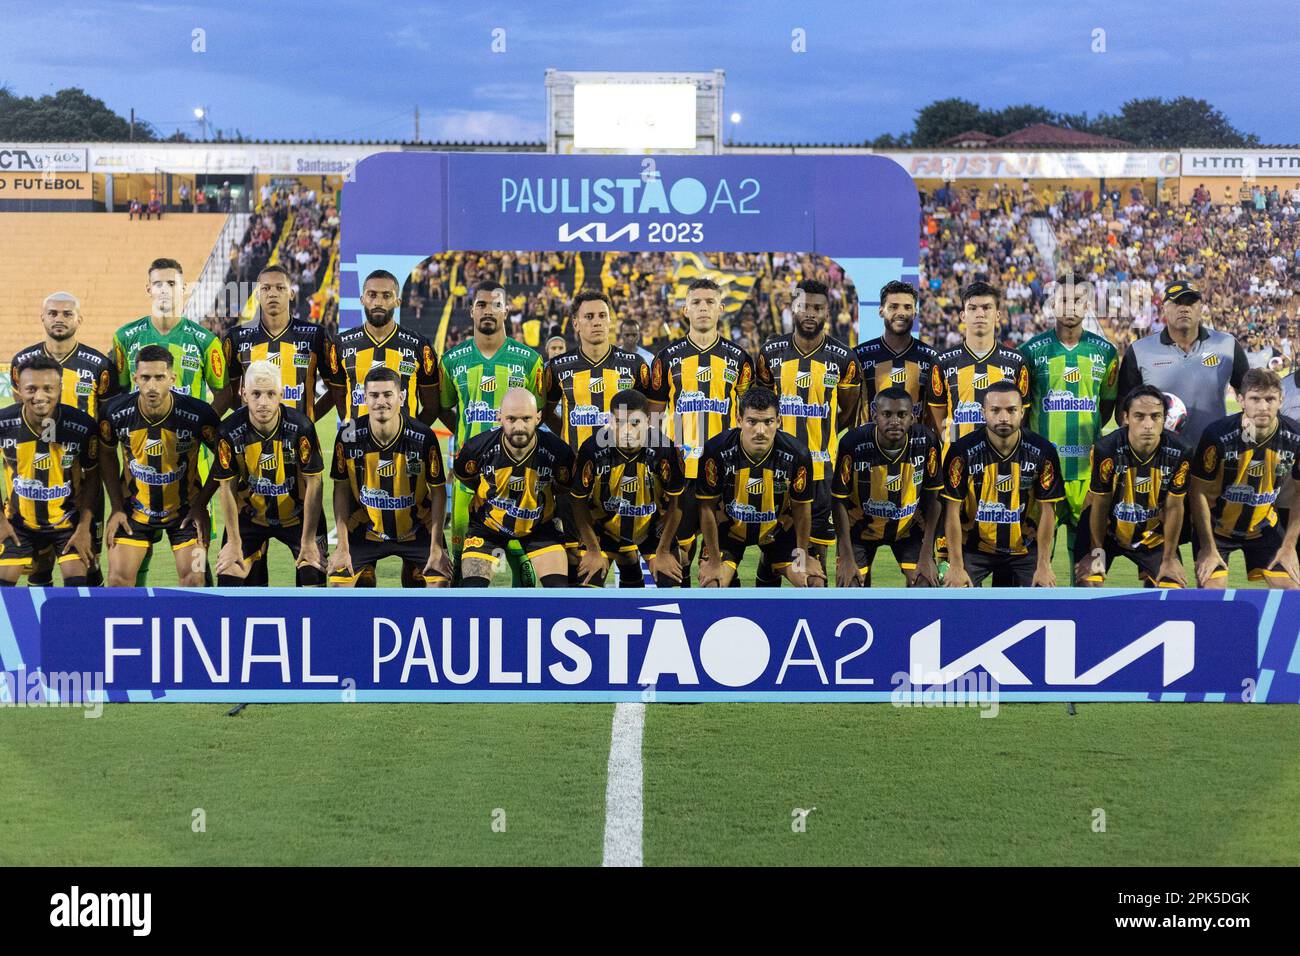 America MG vs Santos: A Clash of Brazilian Football Titans